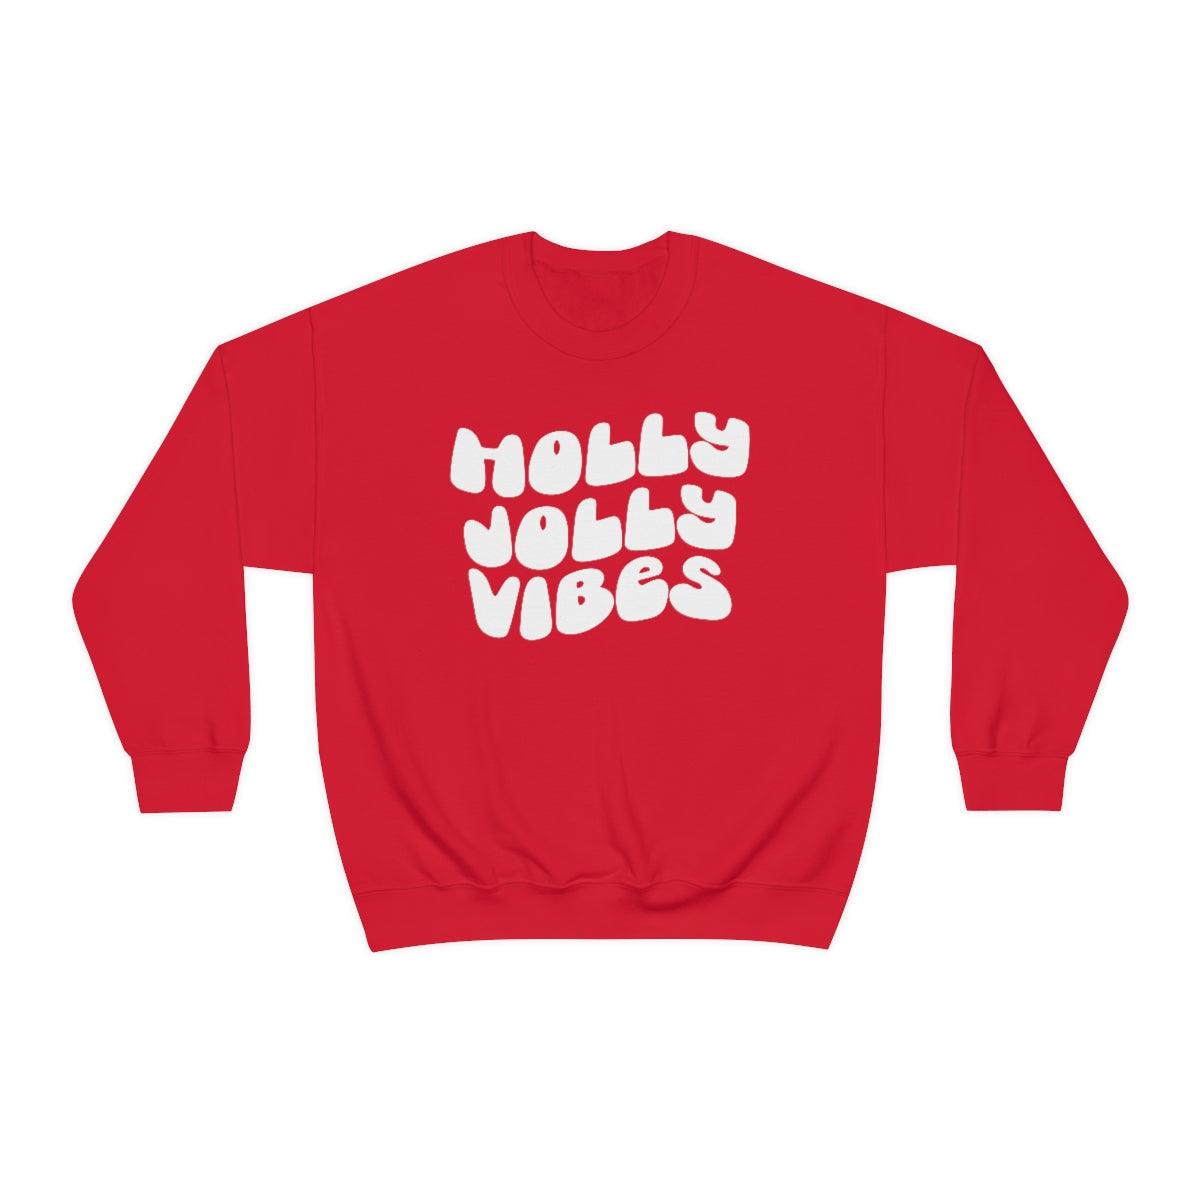 Retro Holly Jolly Vibes Christmas Crewneck Sweater - Crystal Rose Design Co.